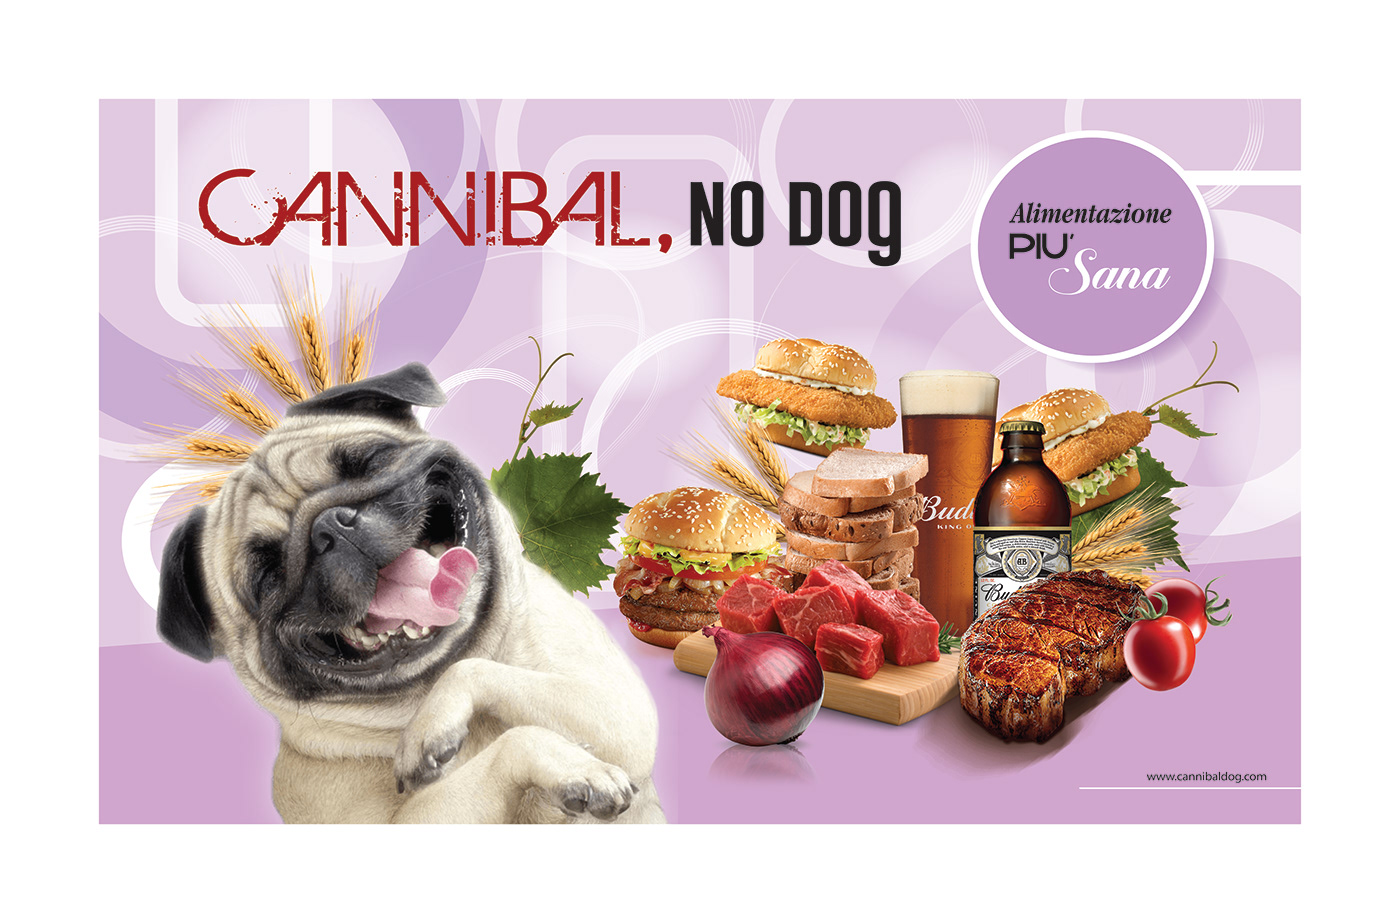 Image may contain: carnivore, animal and dog